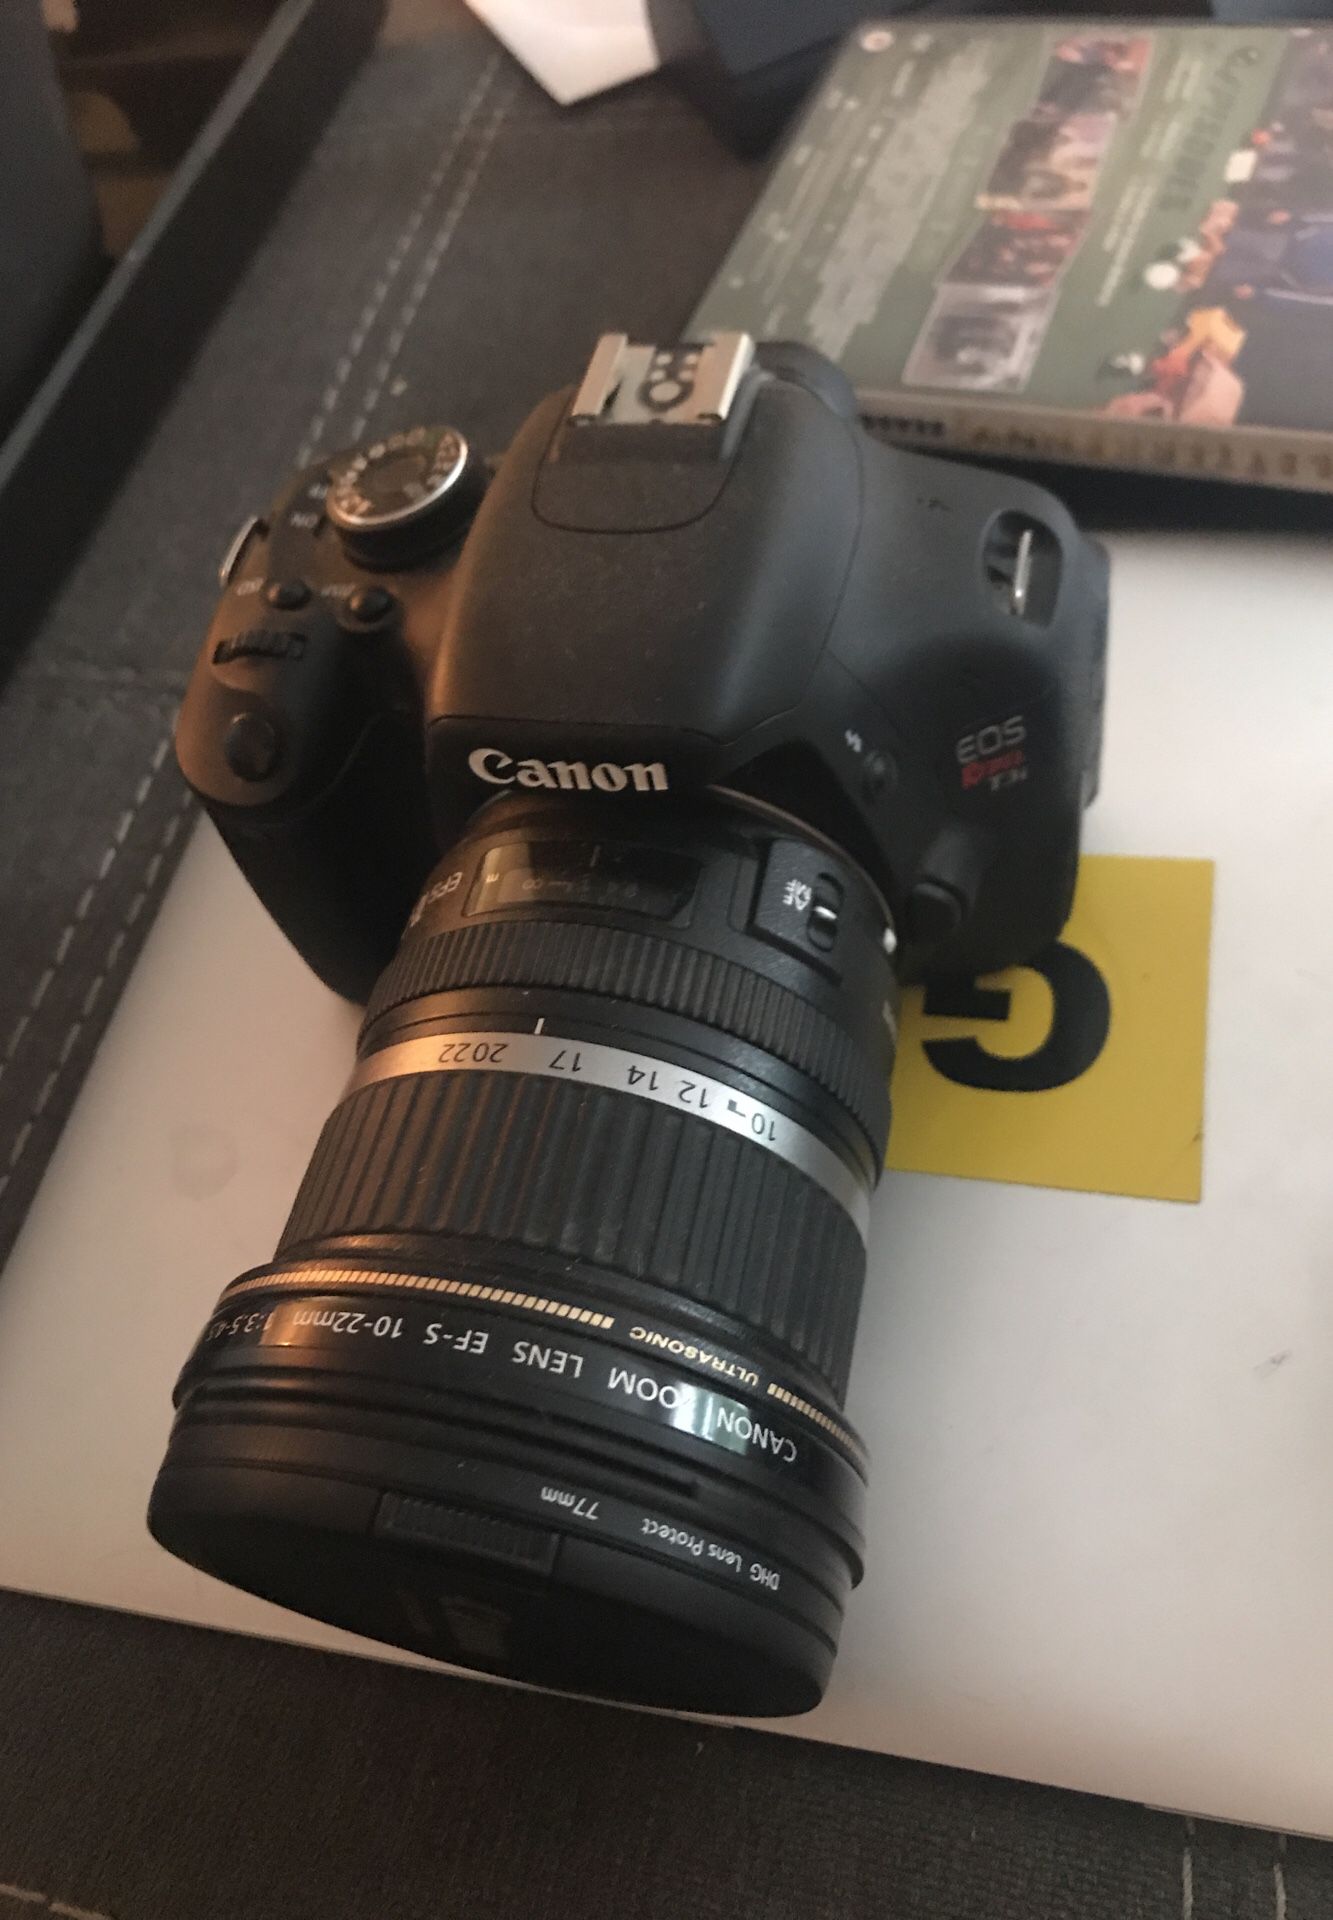 Canon rebel t3i camera and 3 lenses